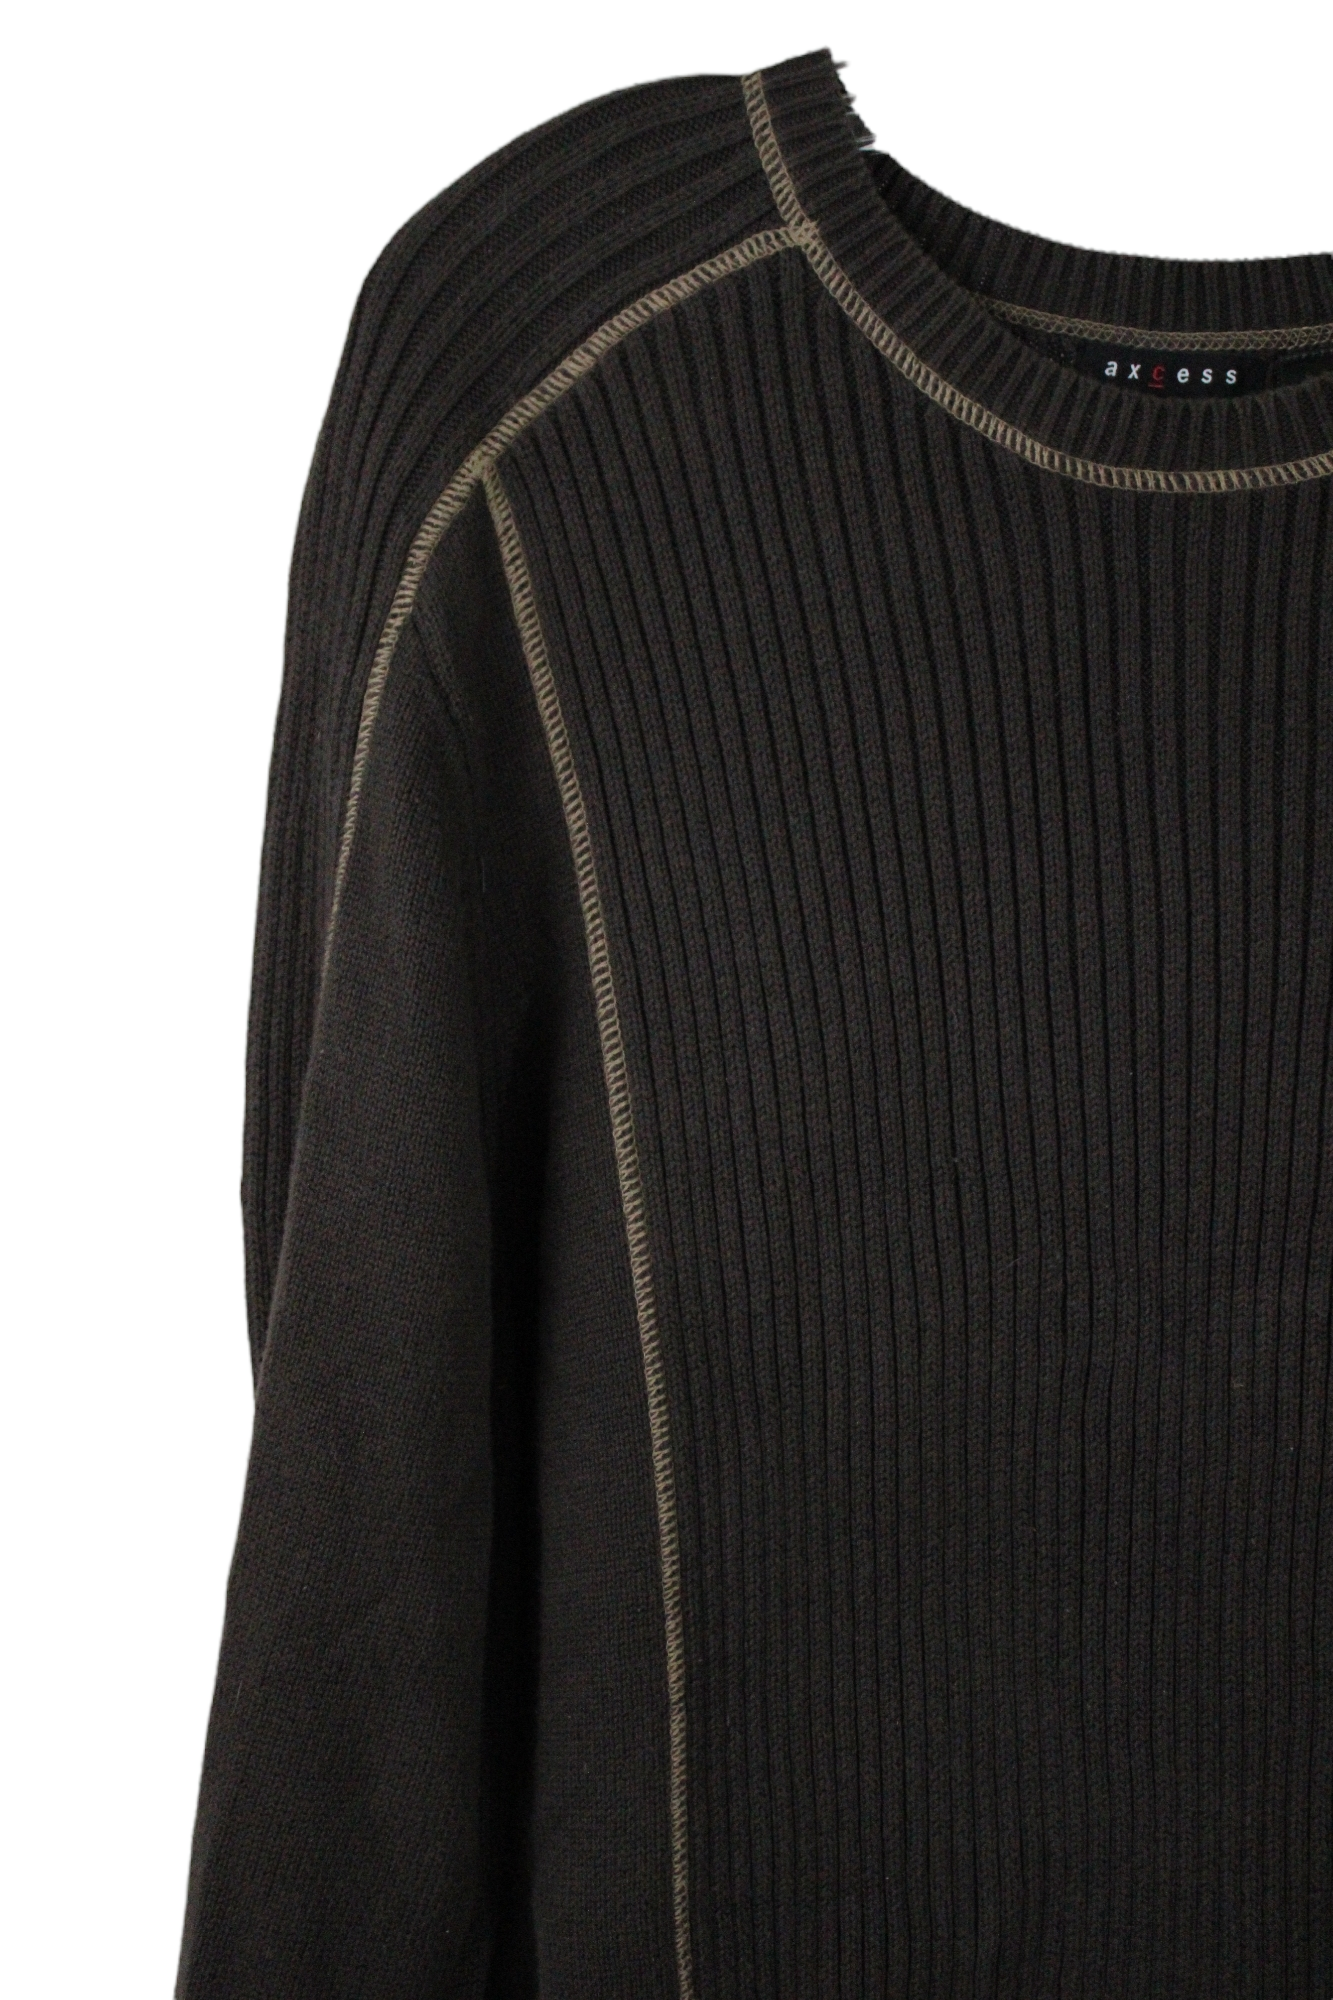 Axcess Brown Knit Sweater | L